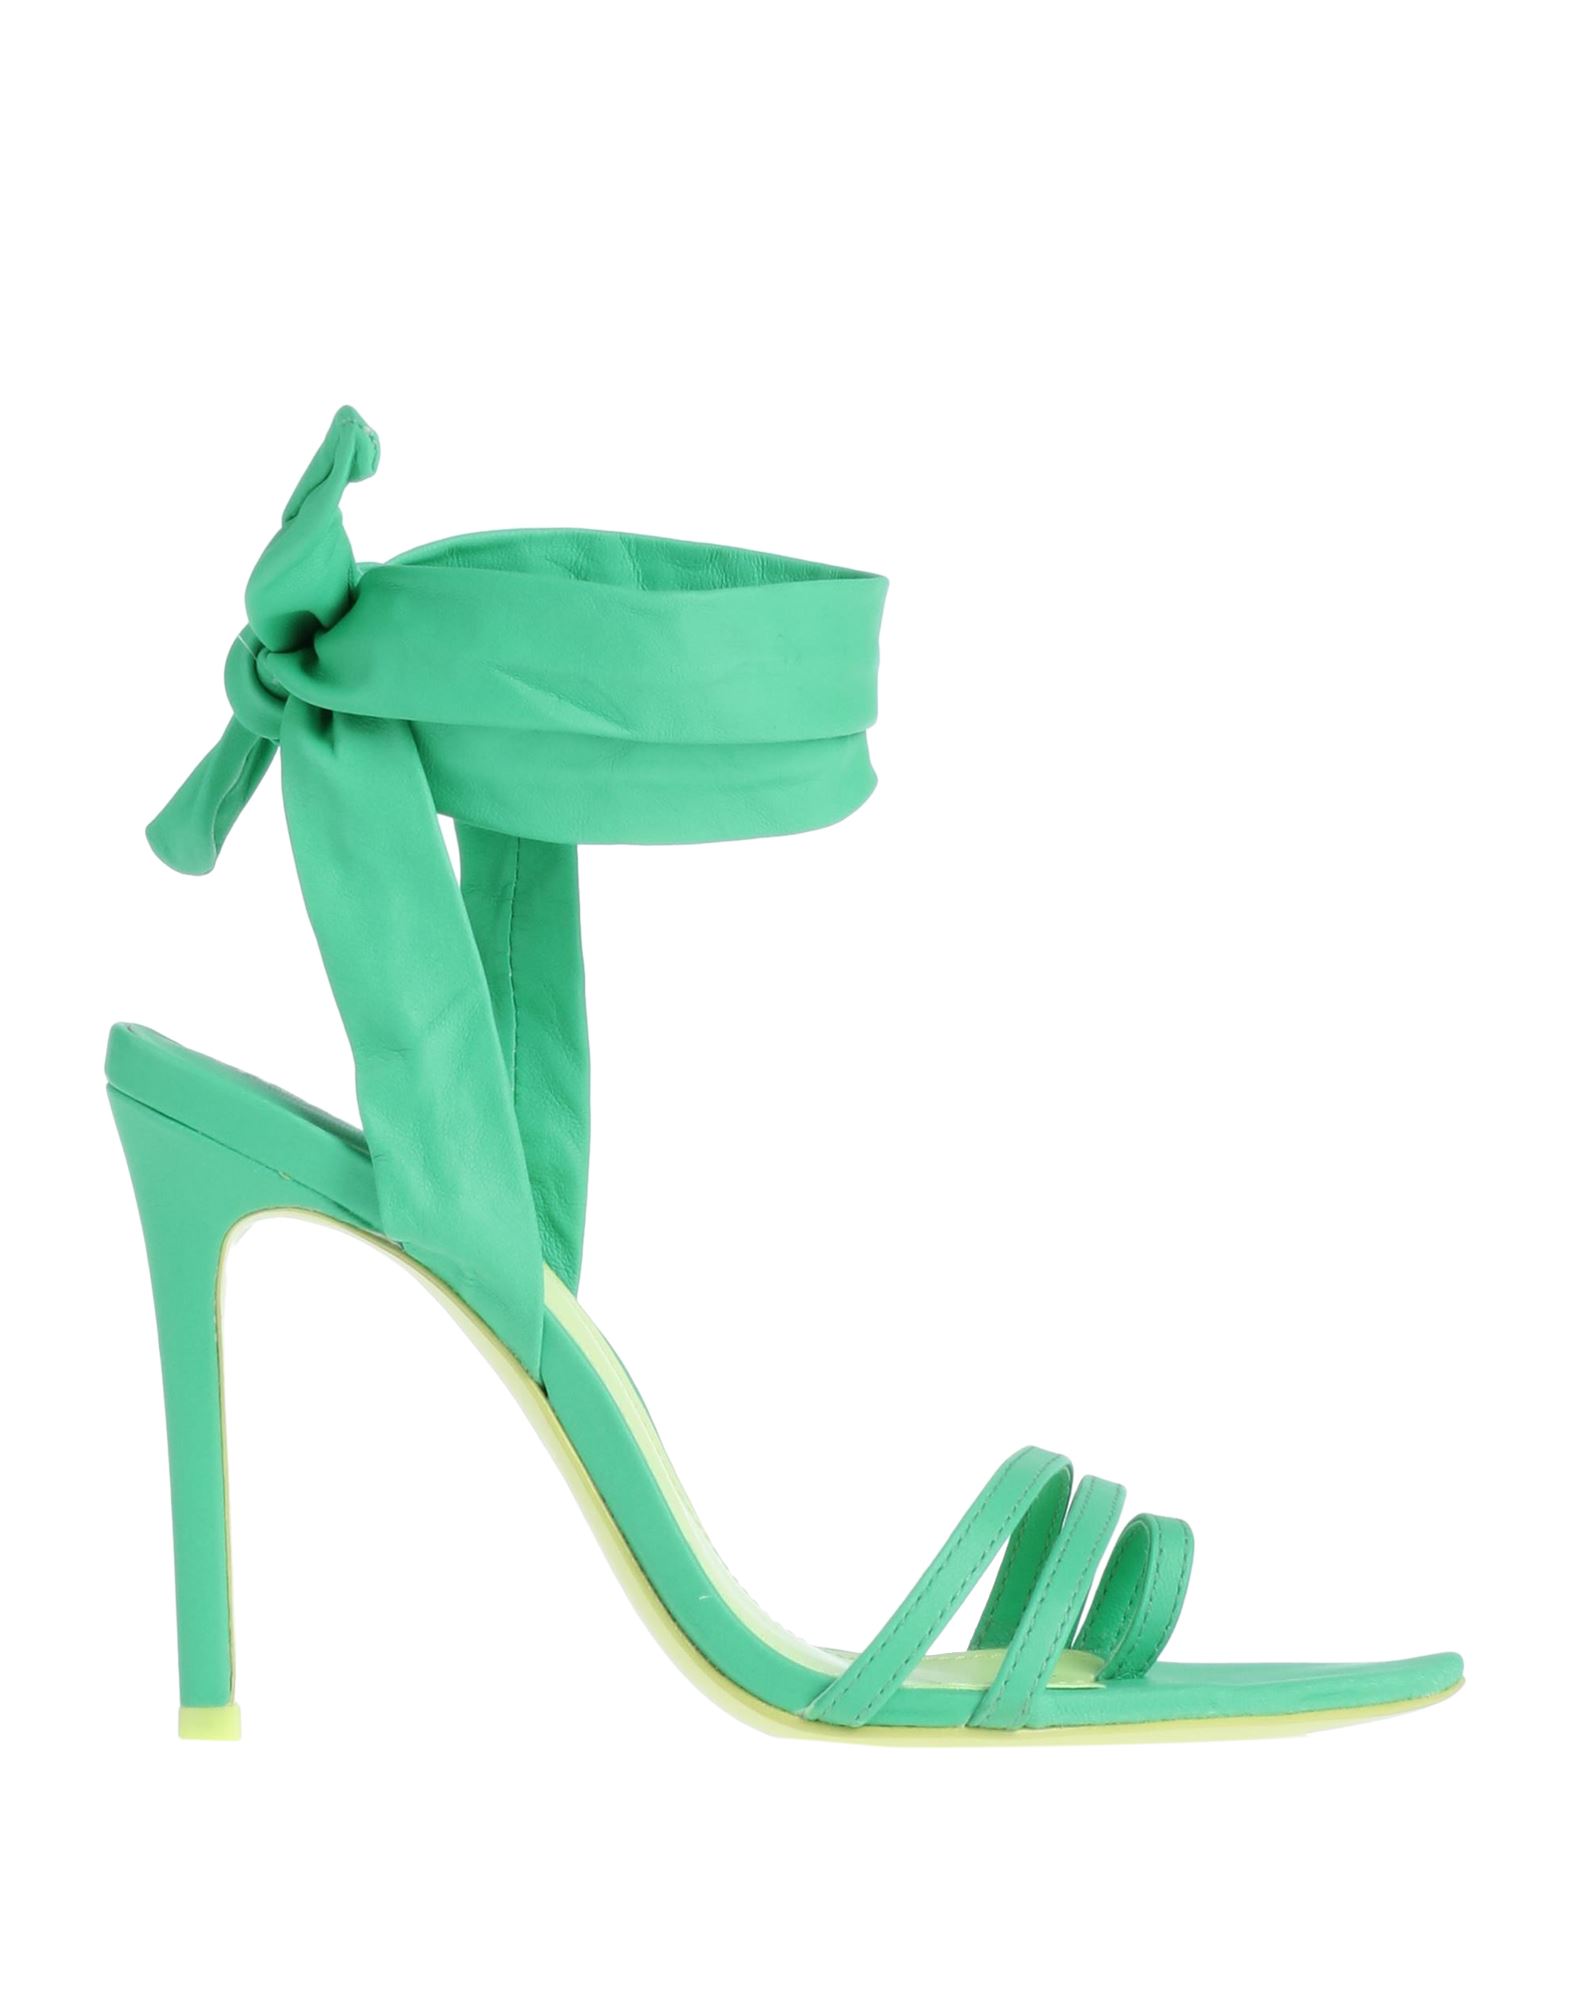 Schutz Woman Toe Strap Sandals Light Green Size 7 Soft Leather